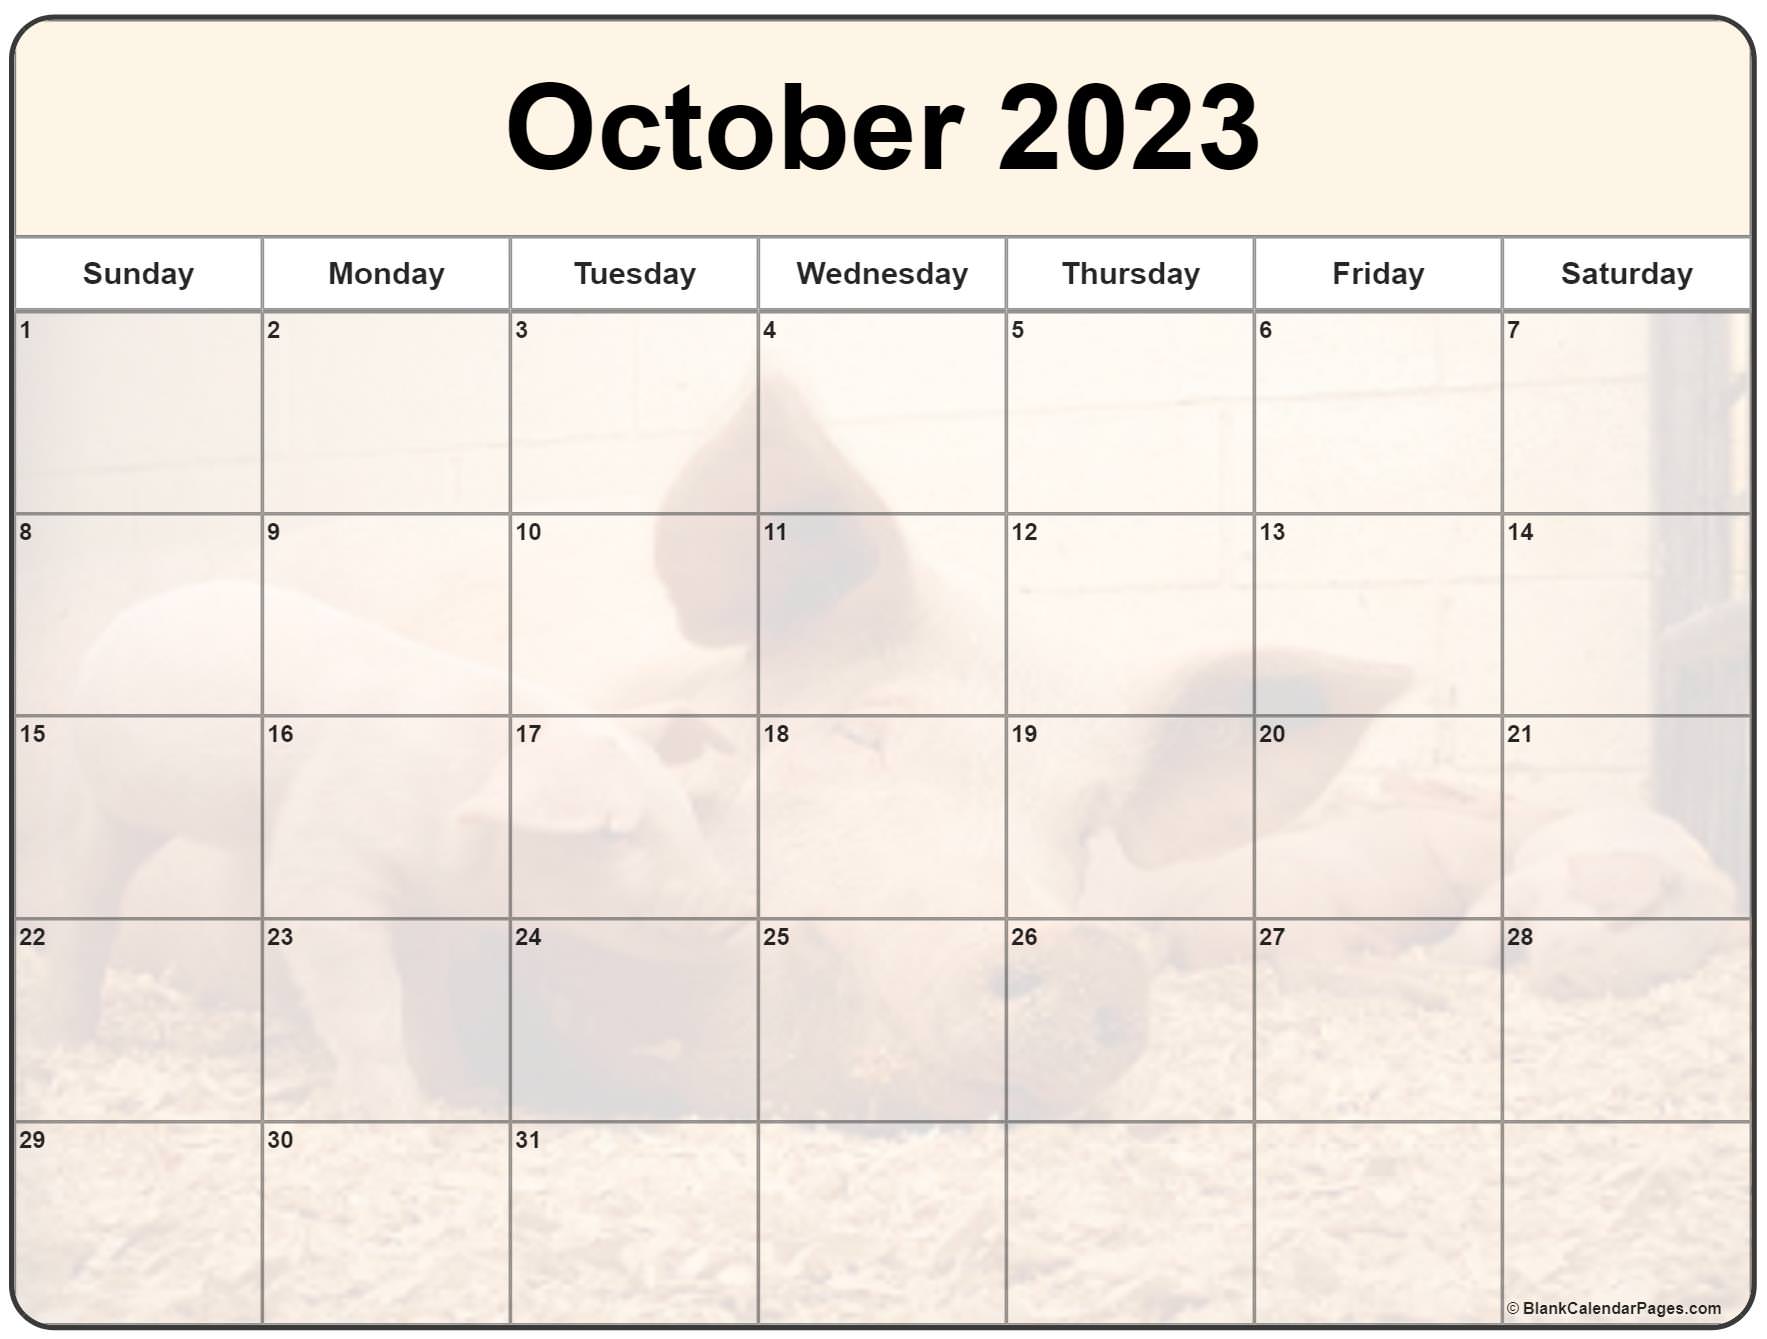 moon-phases-october-2023-2023-calendar